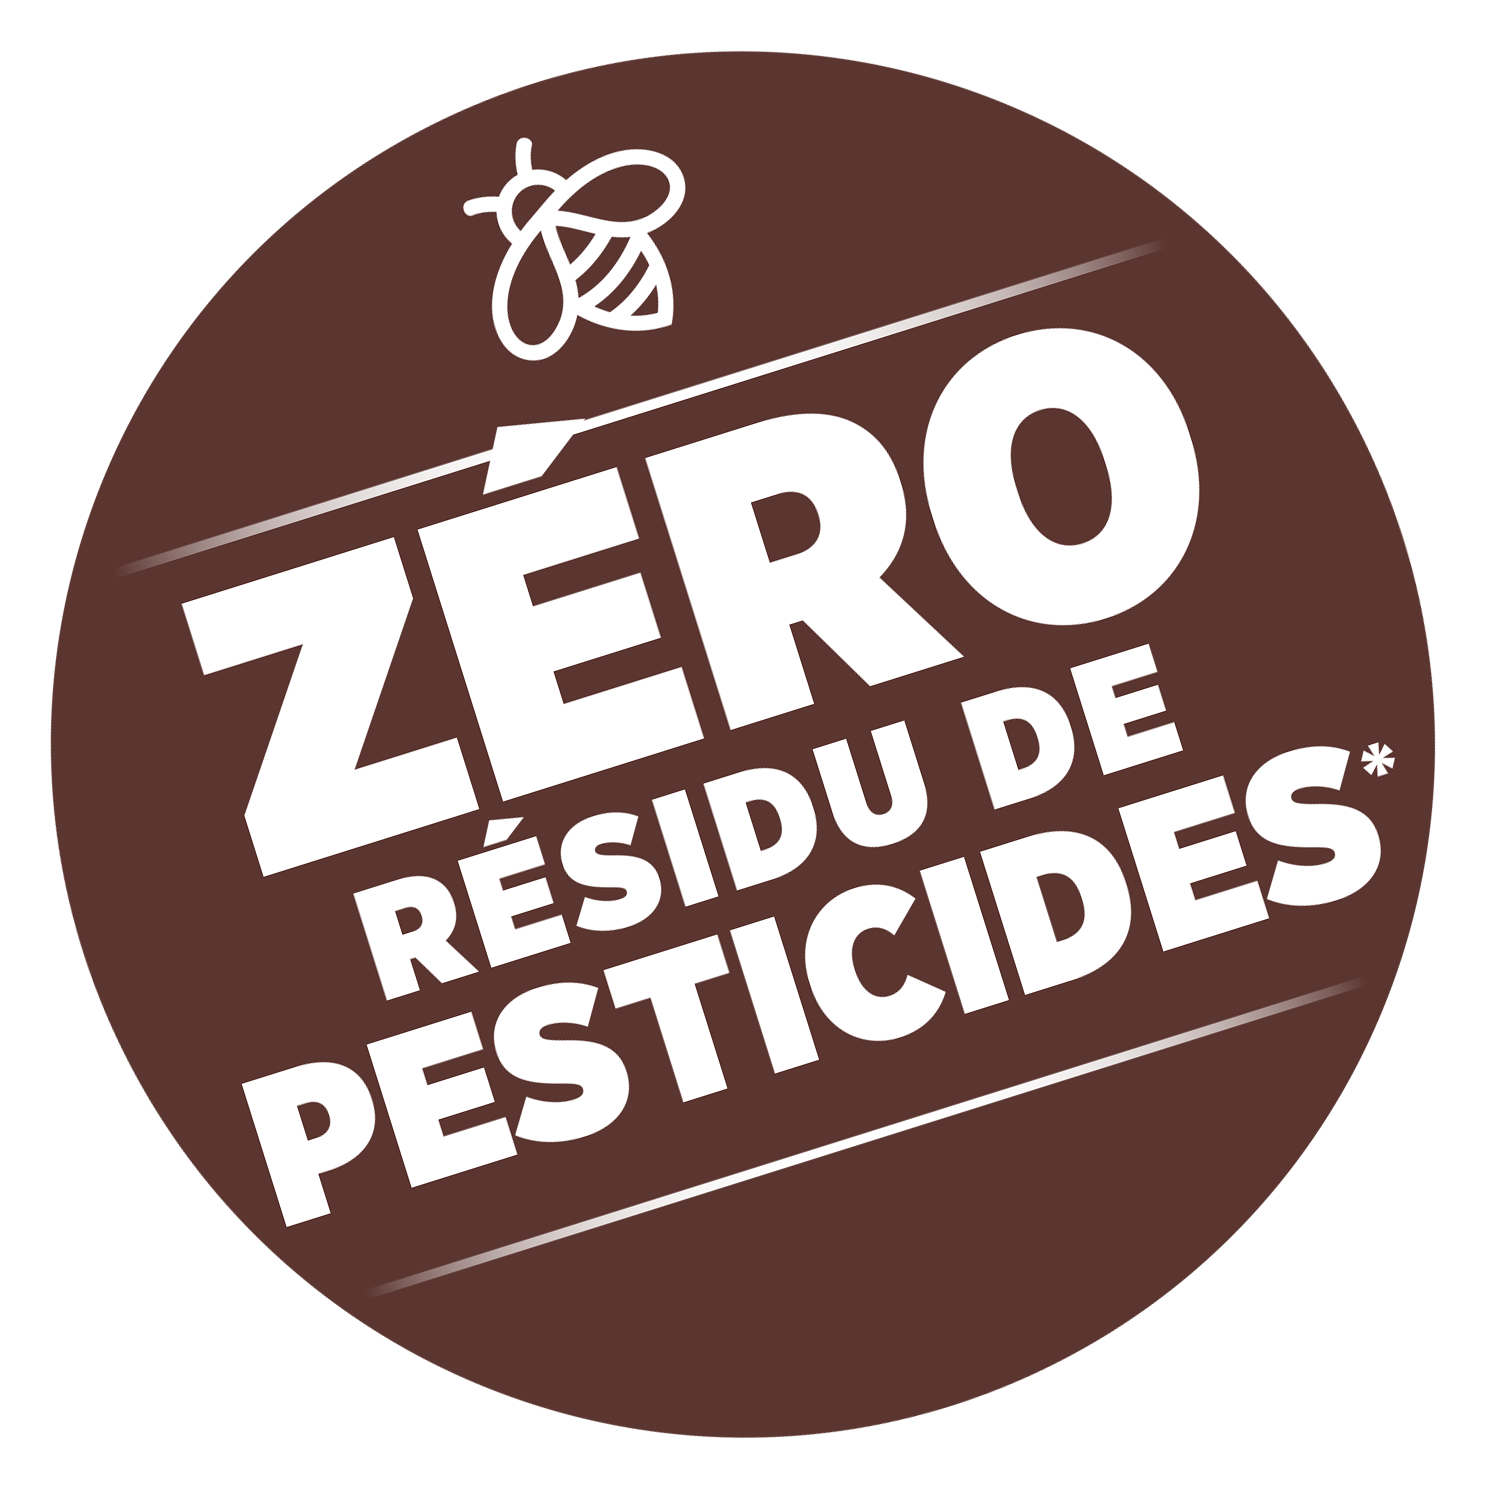 Commitment to zero pesticide residue